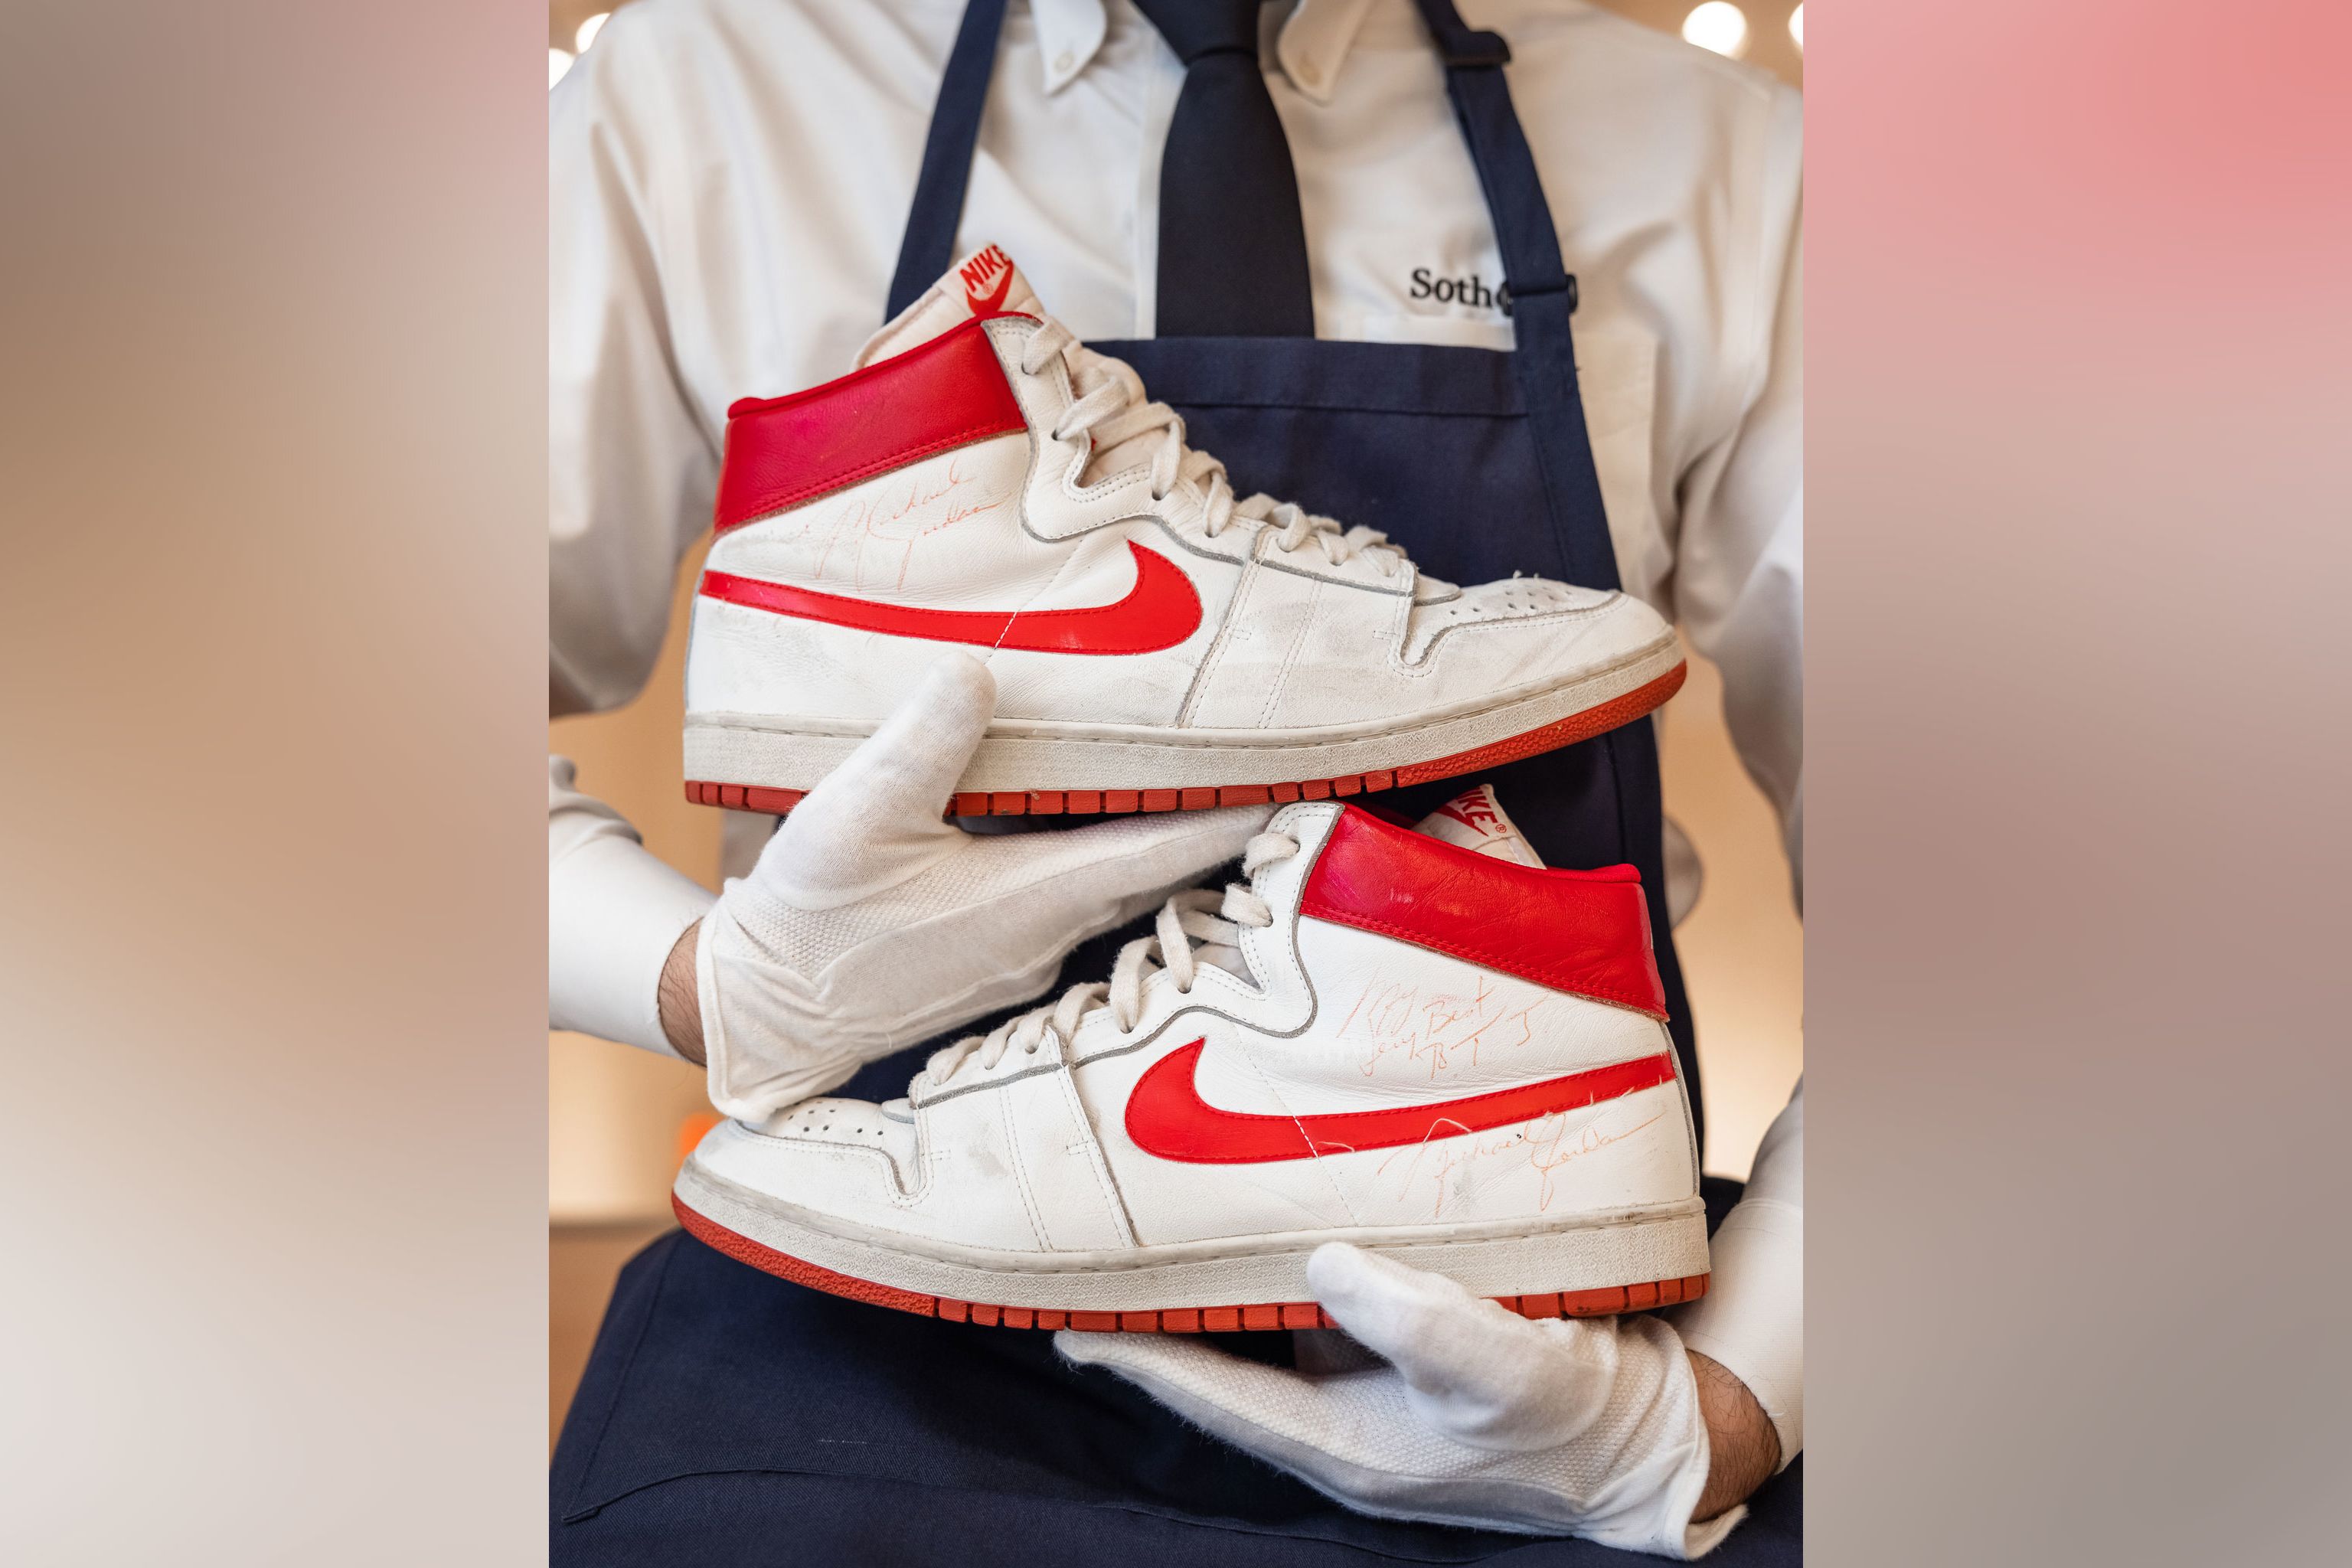 Michael Jordan's sneakers sell record-breaking $1.47 million | CNN